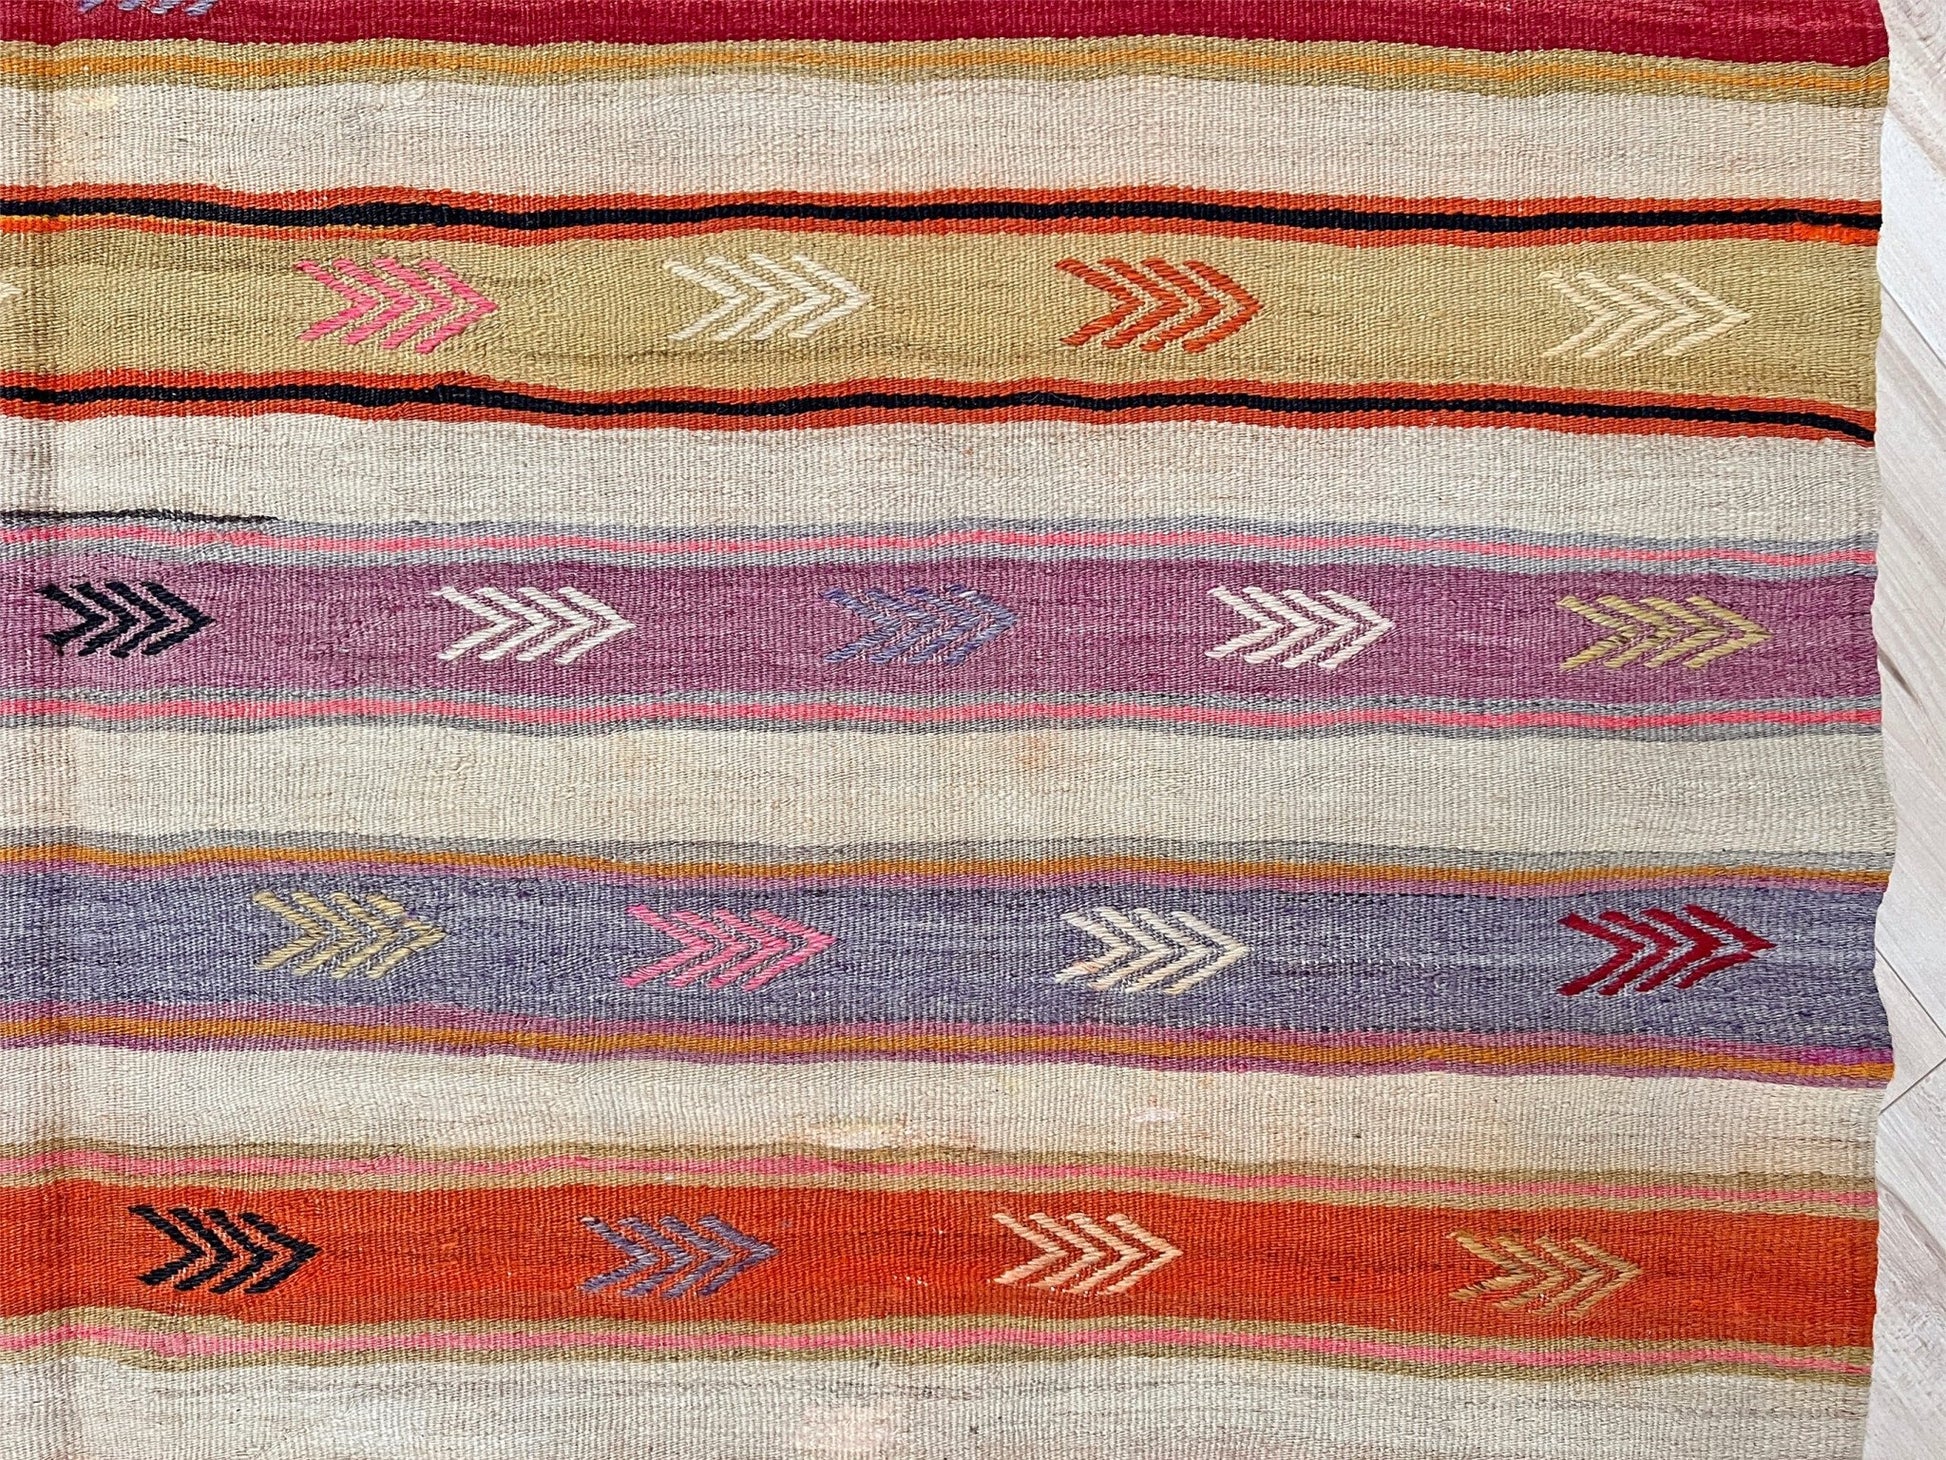 Vintage turkish kilim rug shop bay area. Handmade vibrant rug in living room setting. 6x8 handmade wool rug.  Kilim shop san francisco bay area berkeley california.